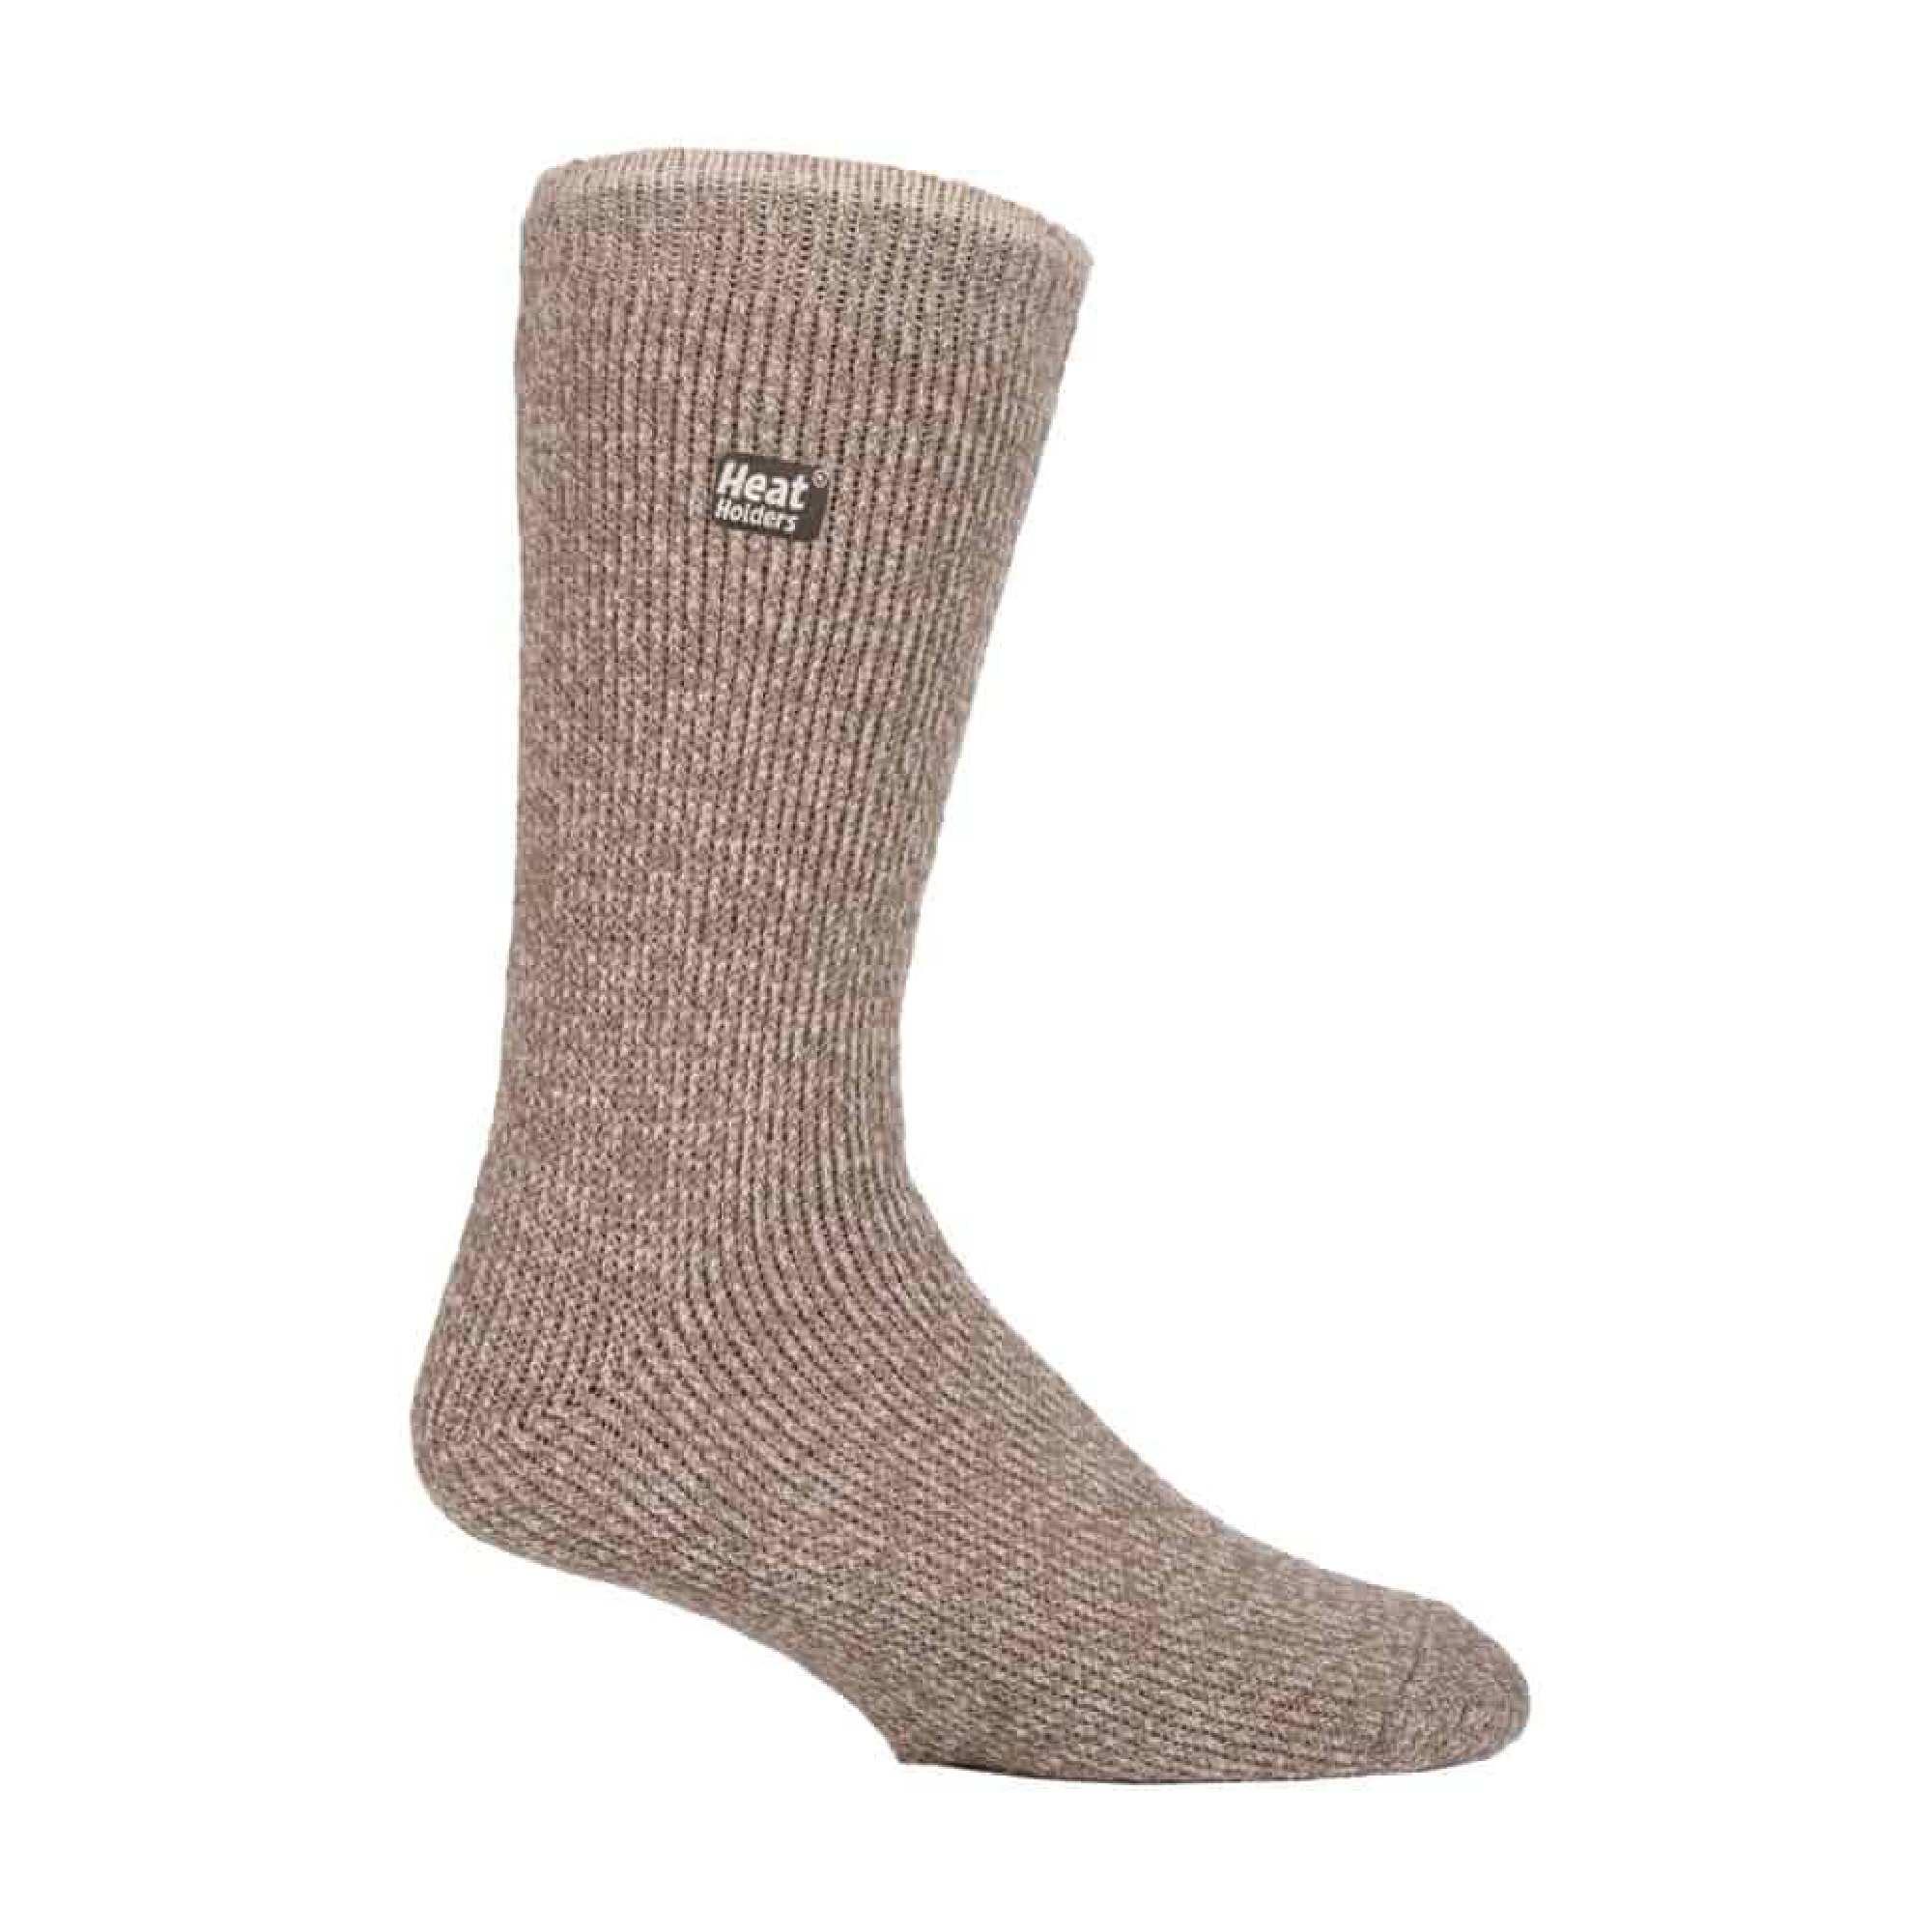 Mens Winter Merino Wool Thermal Socks with Reinforced Heel and Toe 1/6